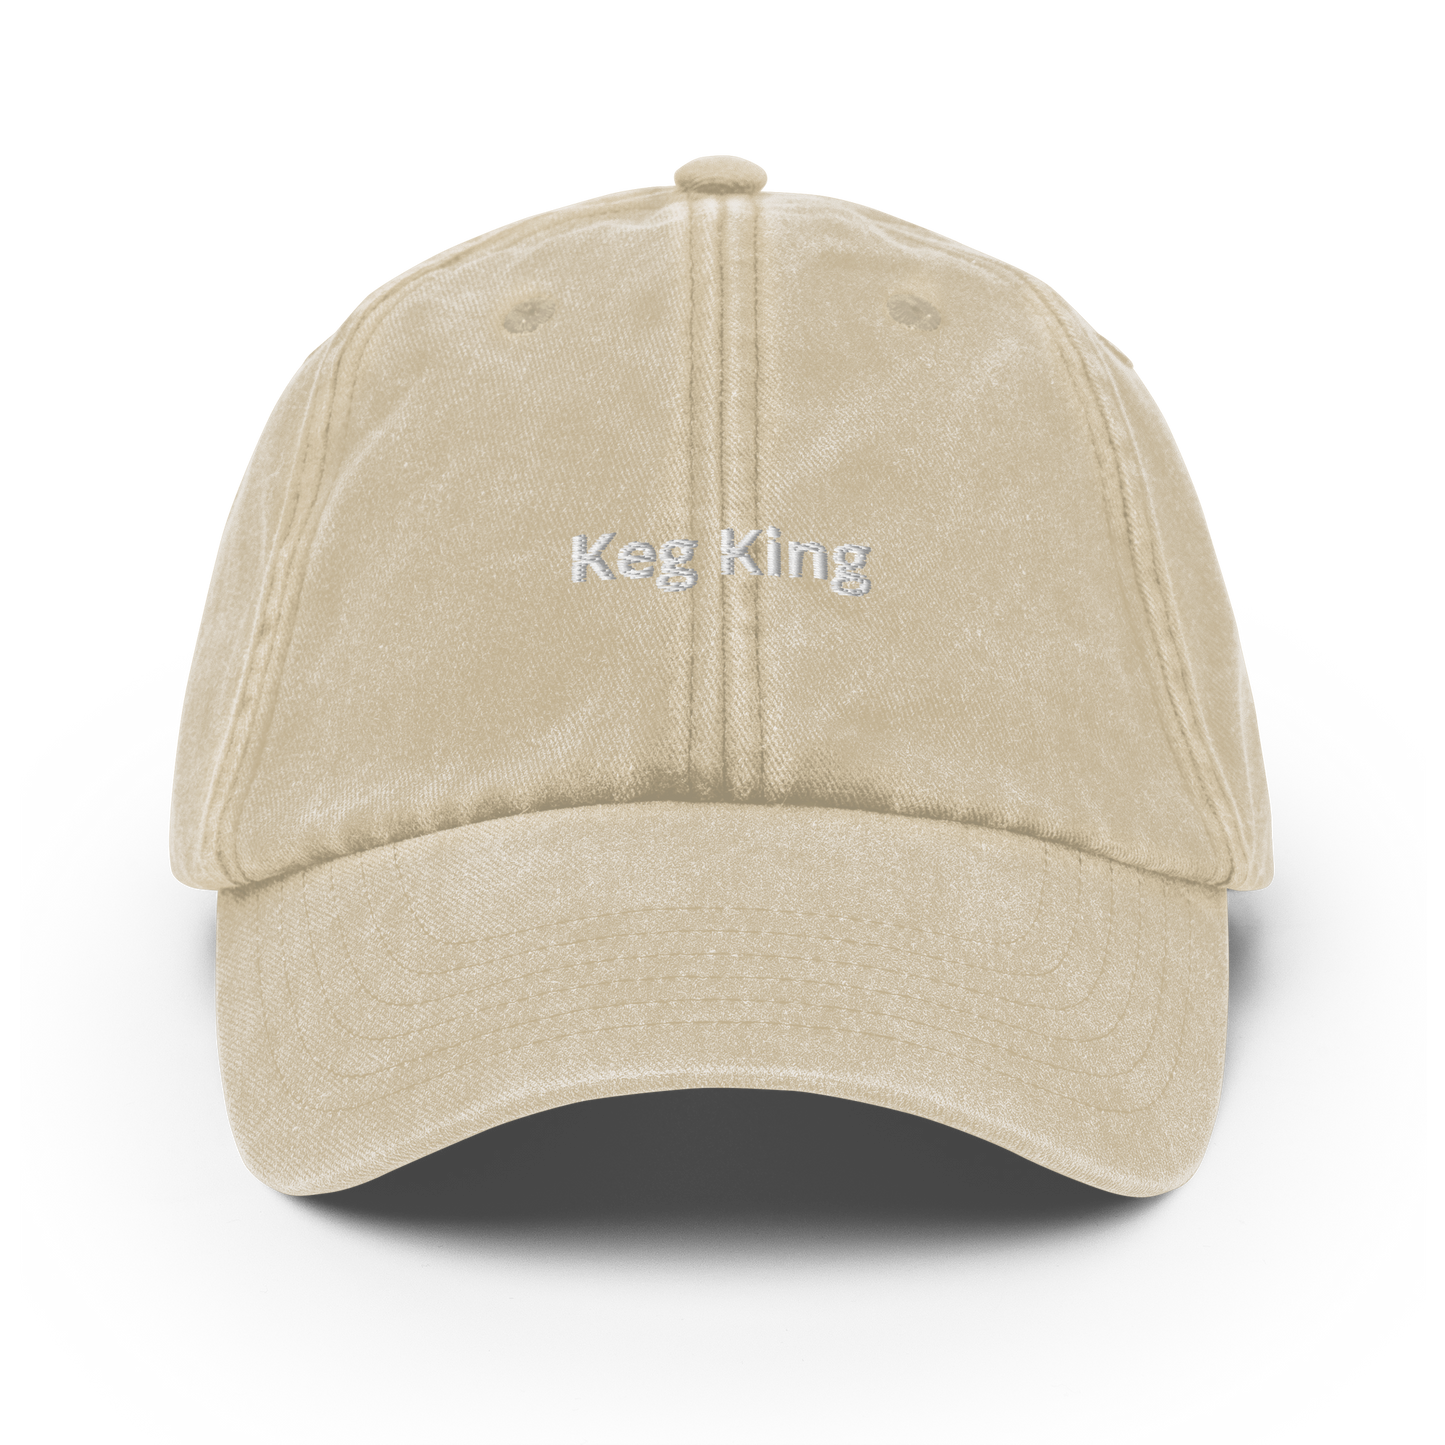 Keg King - Vintage Hat